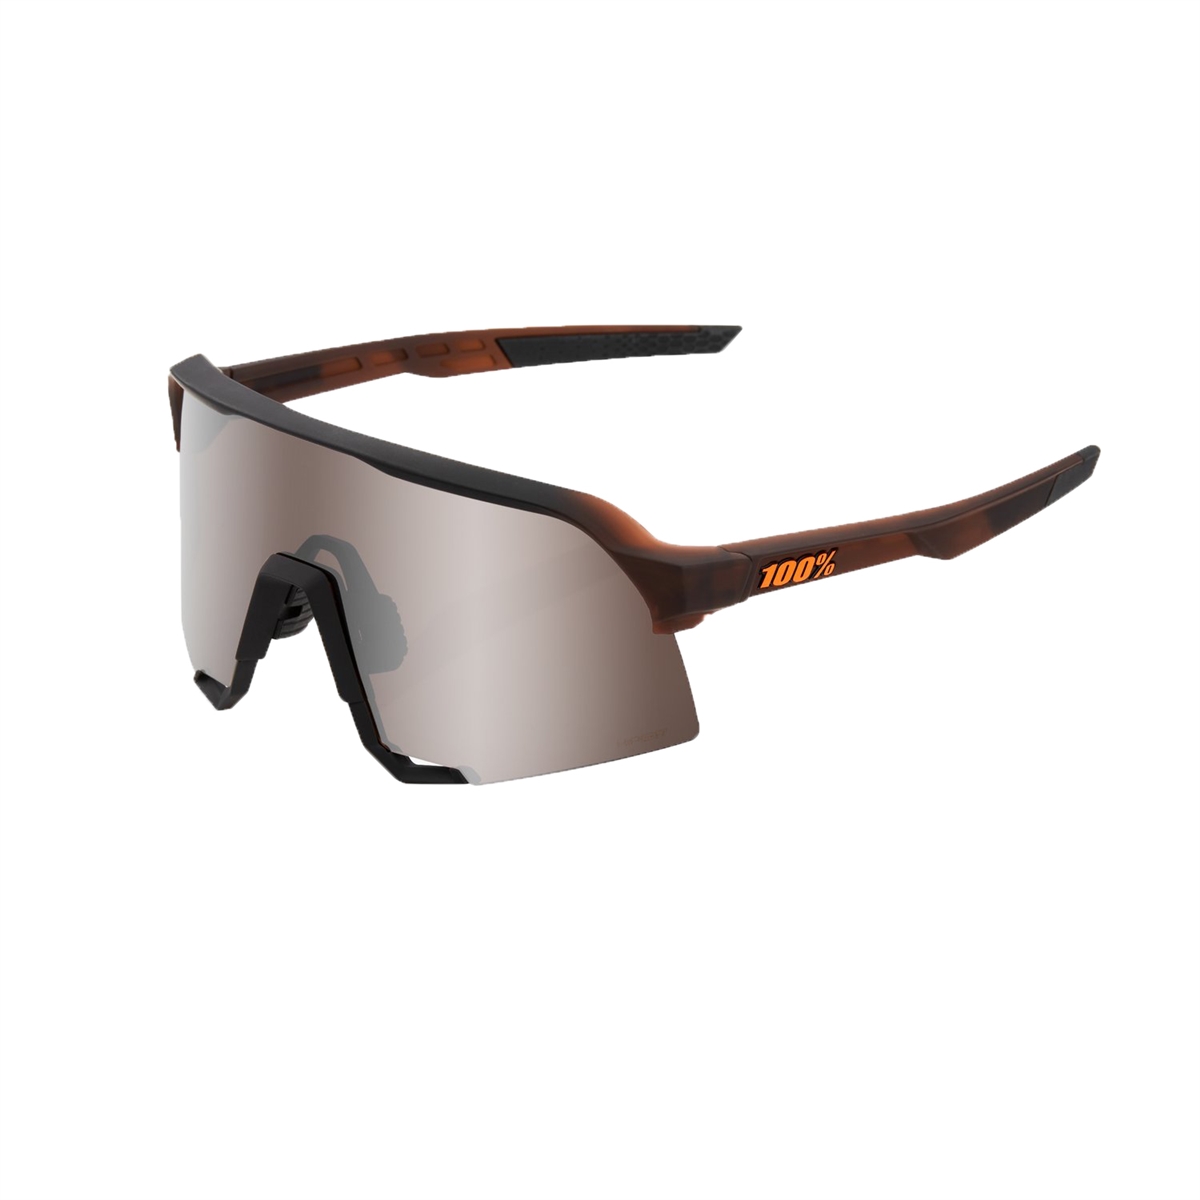 Sunglasses S3 Translucent Matte Brown/HiPER Silver Lens